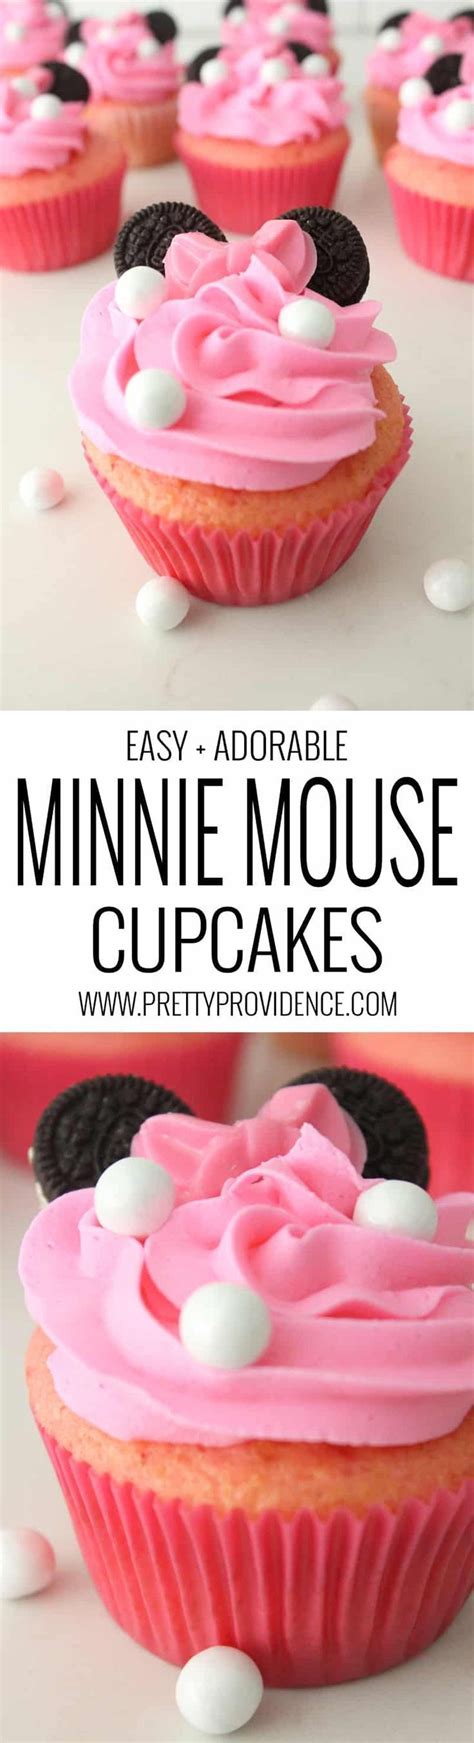 Mini maus (minnie mouse) sedeca figura od einfaches und leckeres minnie mouse muffins rezept mit oreo ohren! Minnie Mouse Cupcakes #cupcakes #minnie #mouse | Minnie ...